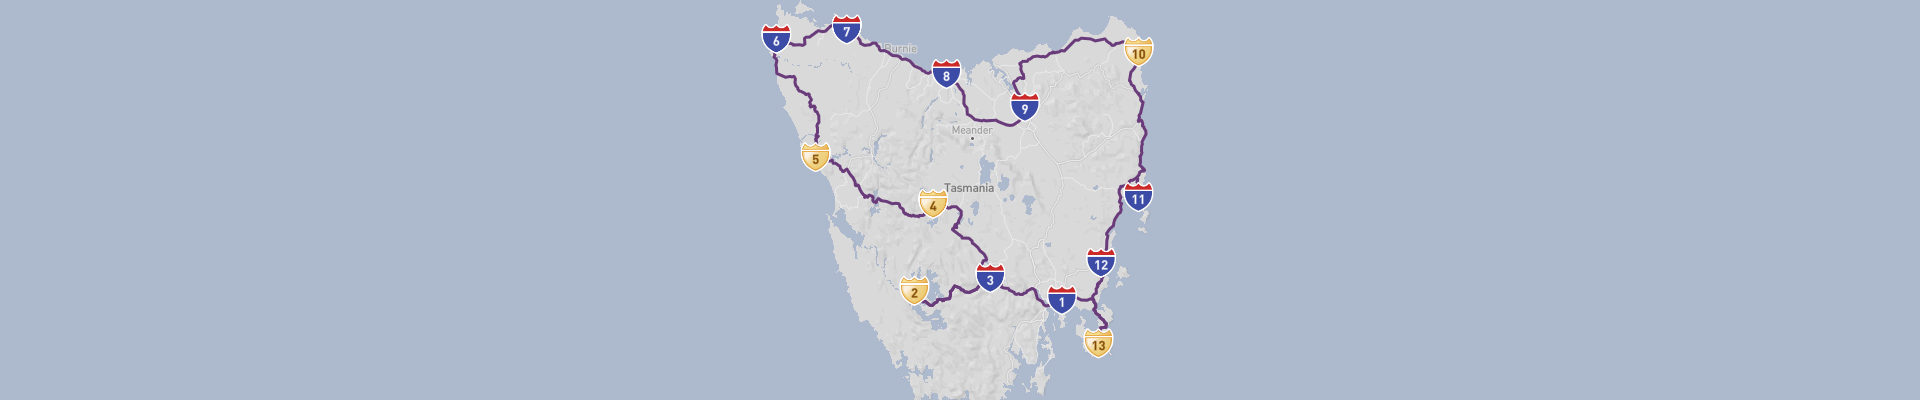 Itinéraire Tasmania 